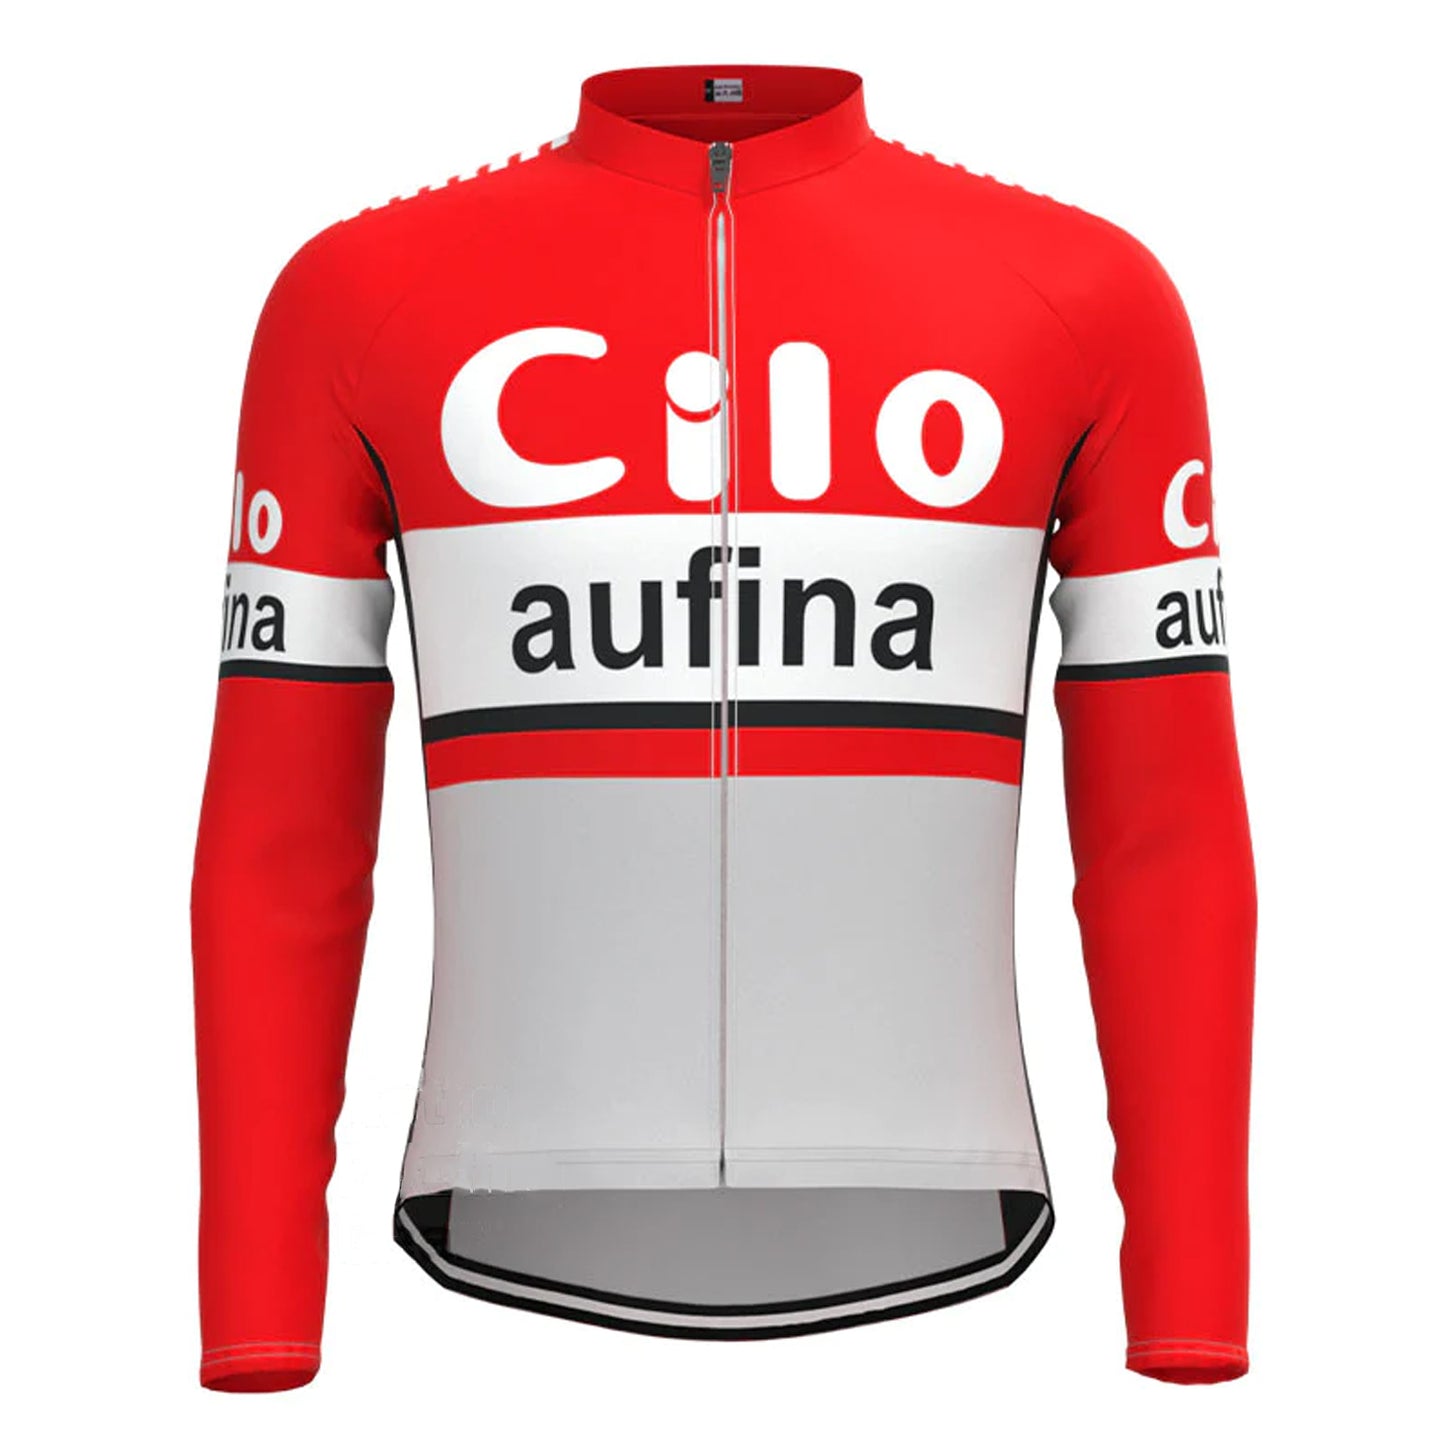 Cilo Aufina Red Long Sleeve Cycling Jersey Matching Set